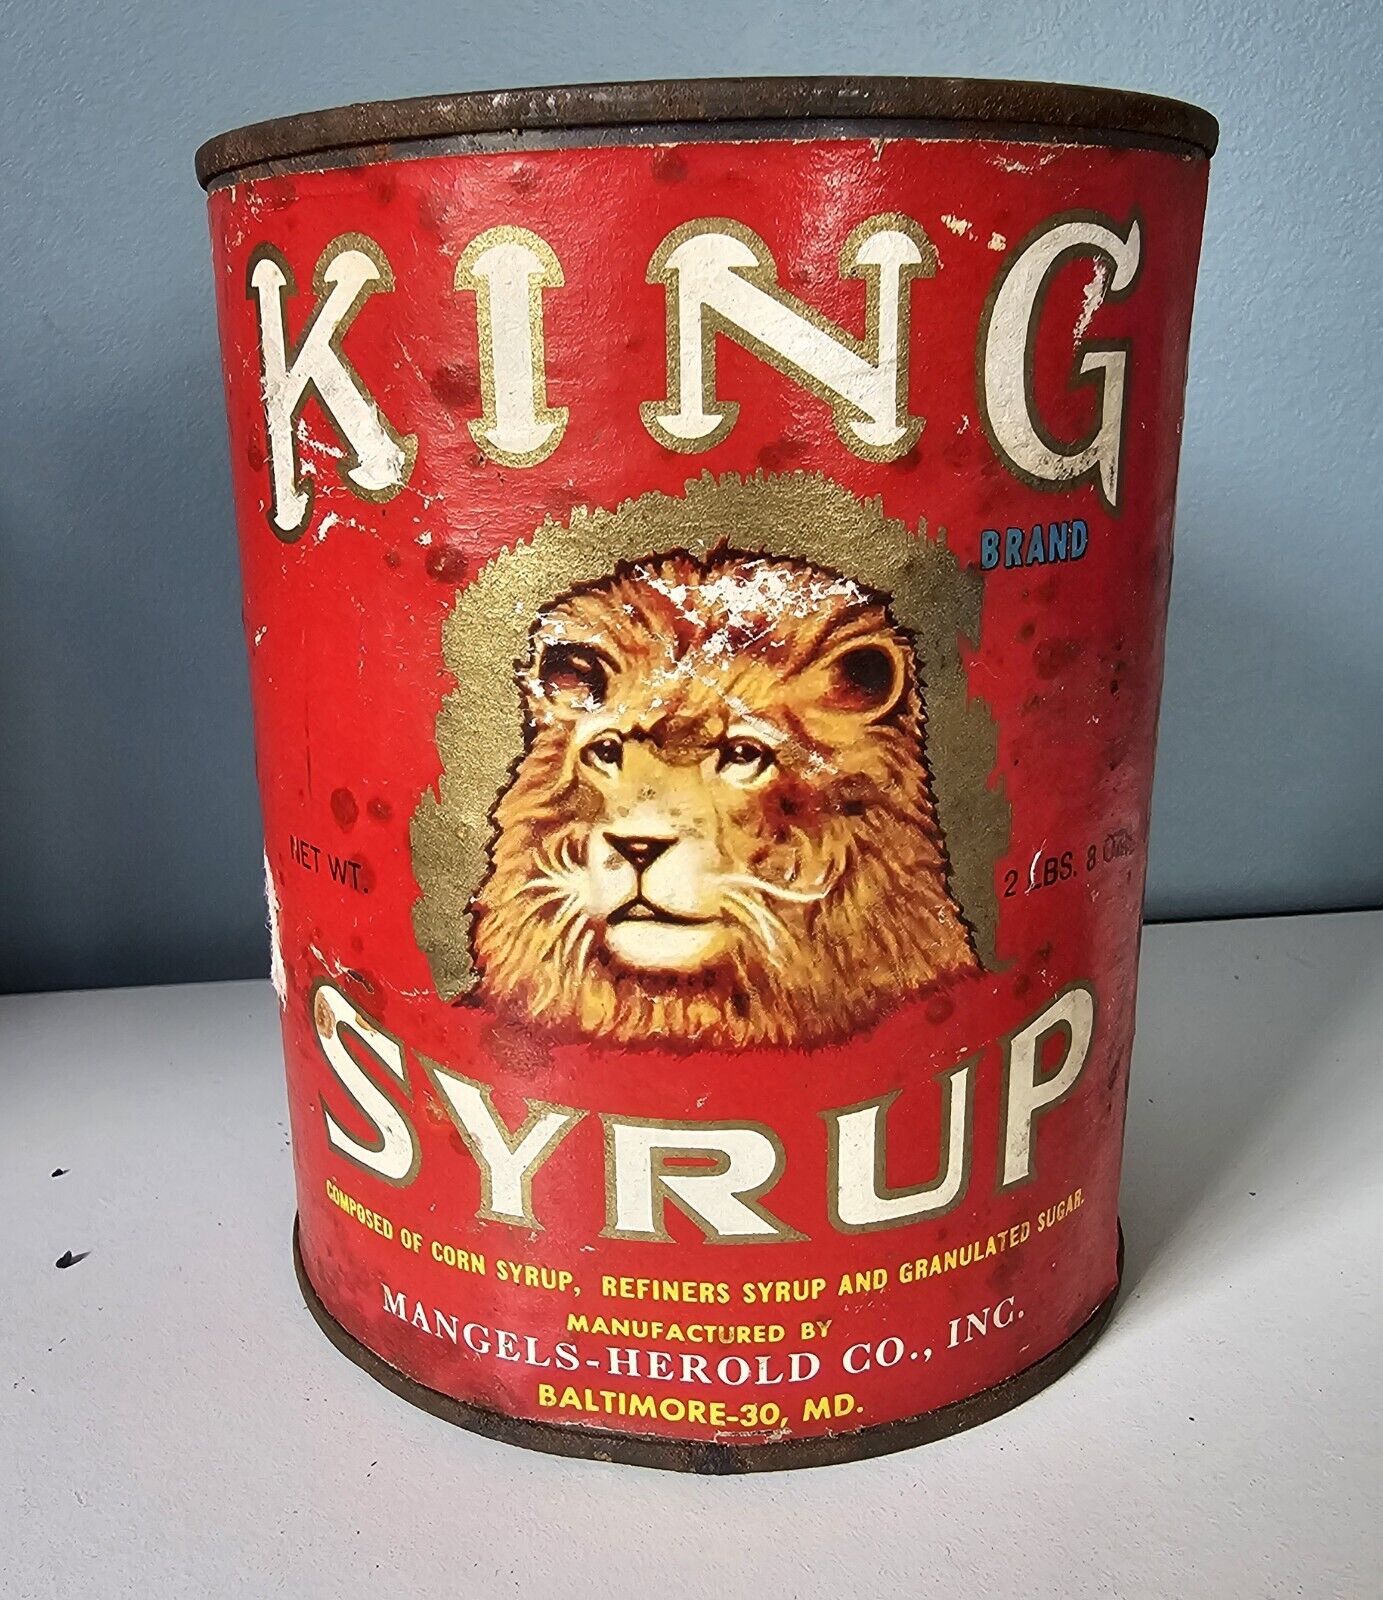 King Syrup Vintage Antique Tin Can, 2lb 8oz, Baltimore-30 MD